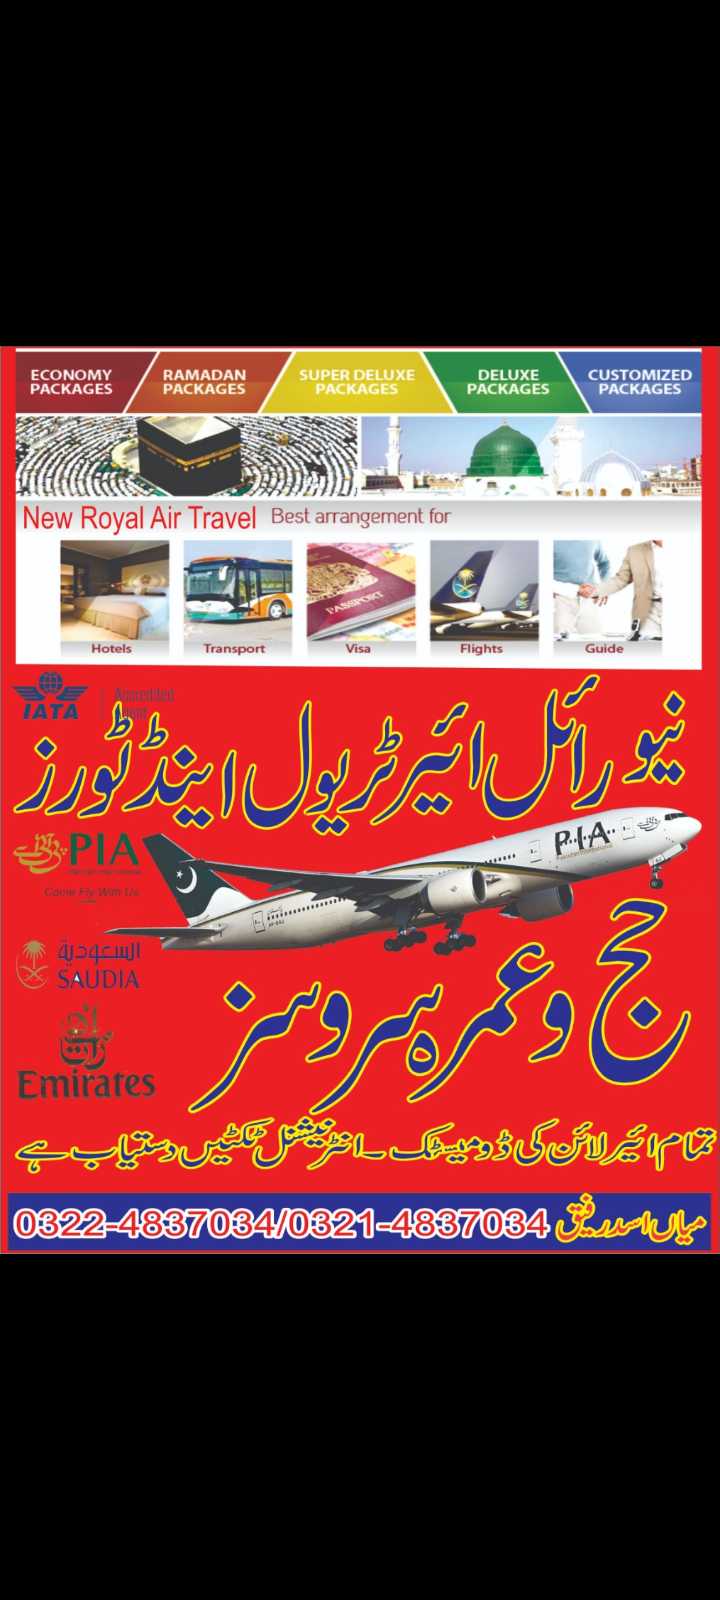 New Royal Air Travel tour.. in Sheikhupura, Punjab - Free Business Listing